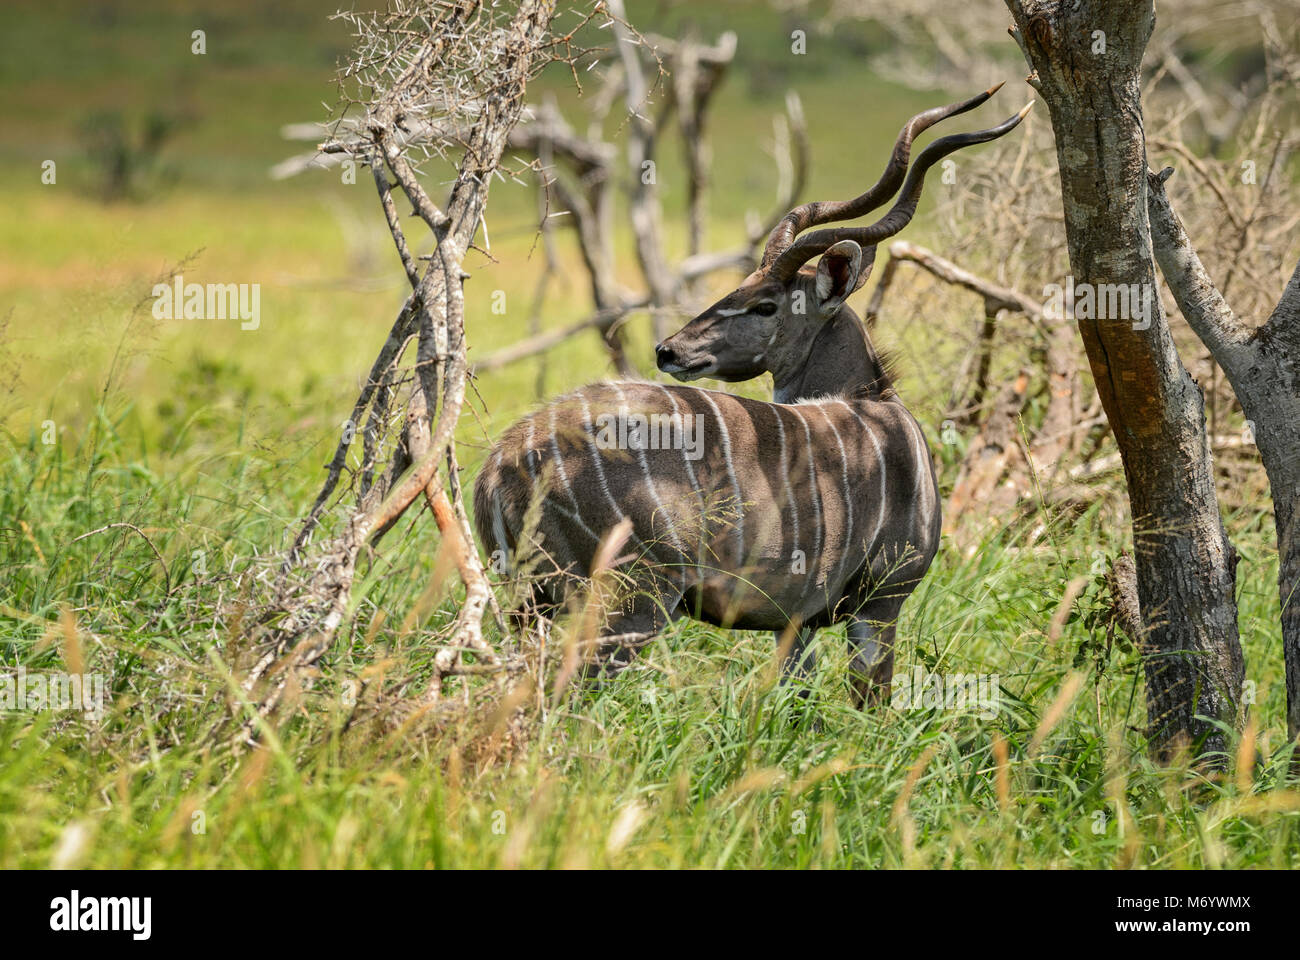 Greater Kudu - Tragelaphus strepsiceros, large striped antelope from African savanna, Taita Hills reserve, Kenya. Stock Photo